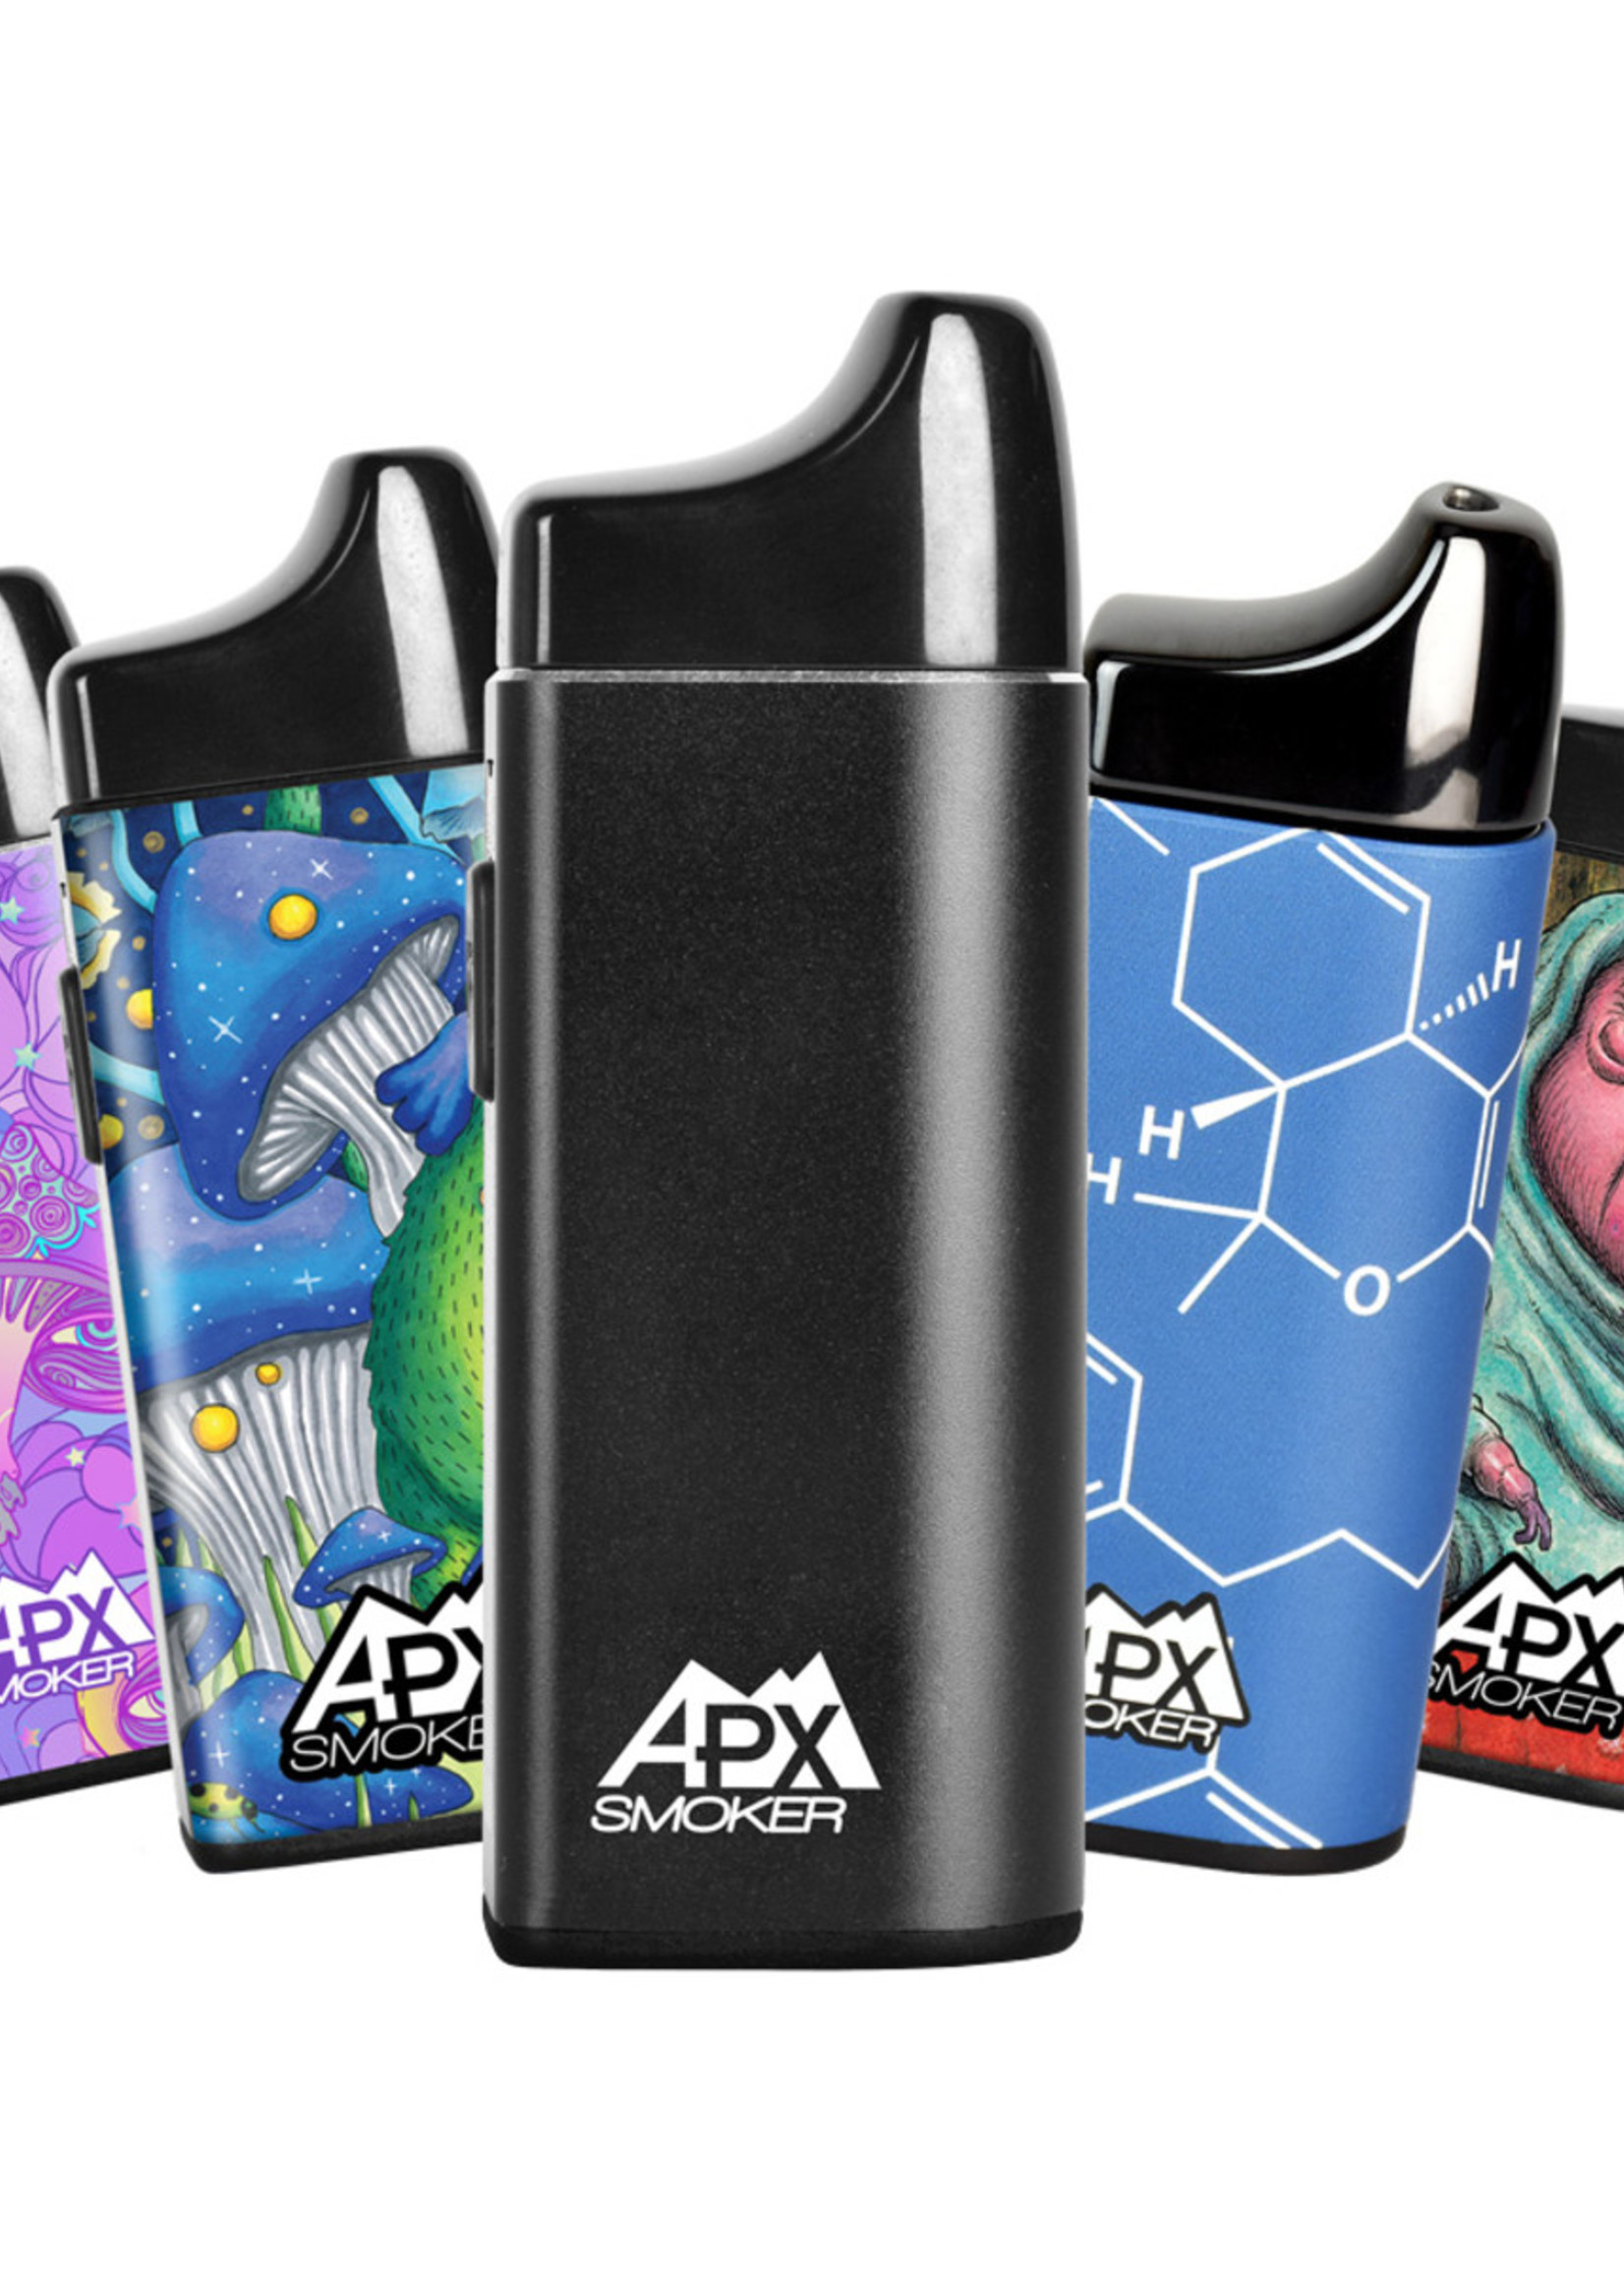 Pulsar APX Smoker V3 Electric Pipe Asstd Designs - #2023